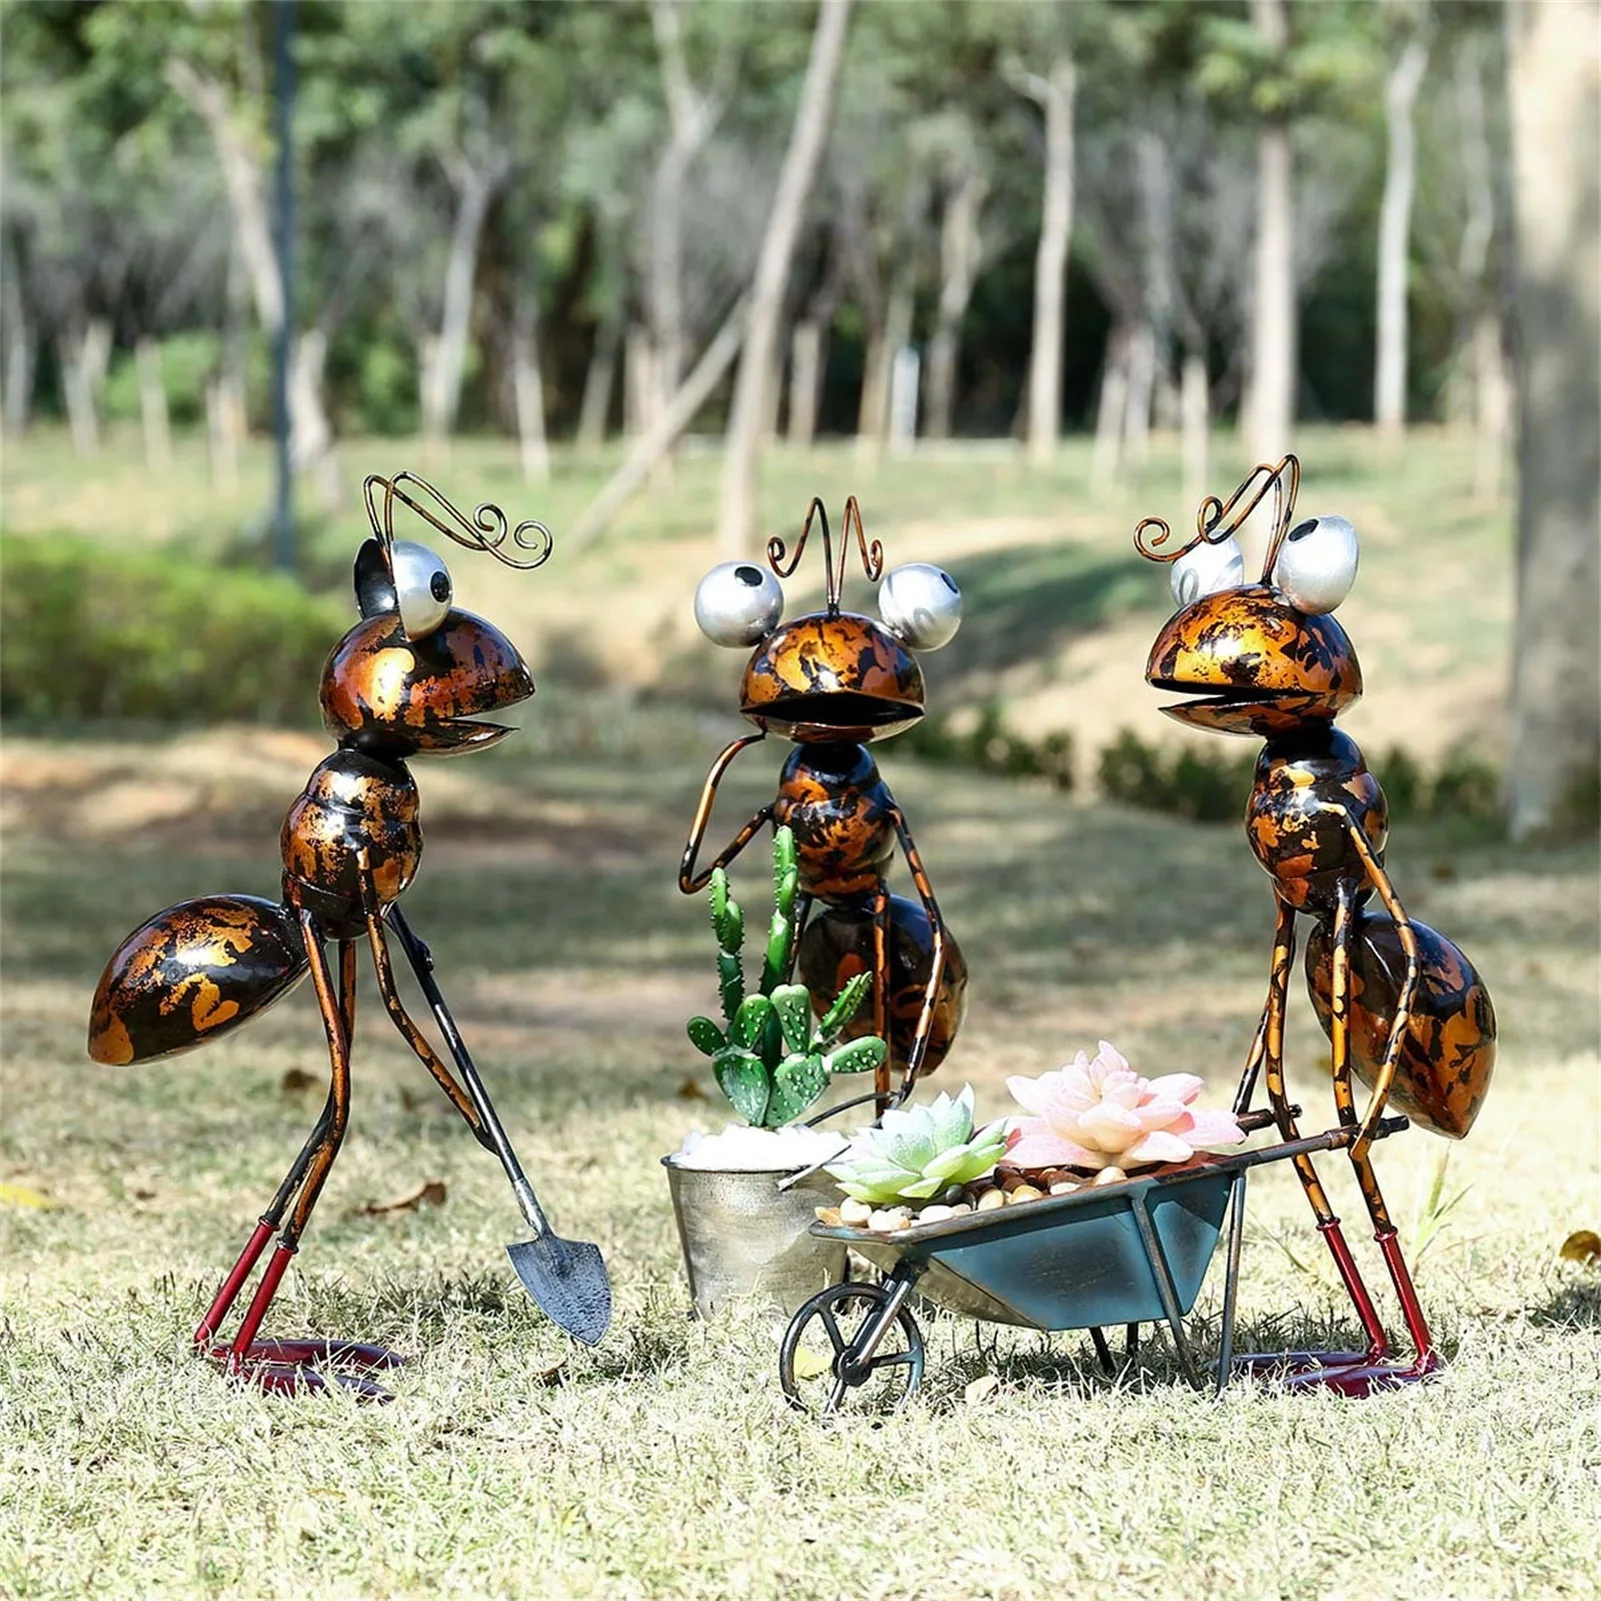 

Pismire Metal Ant Garden Decor Sculpture Home Patio Lawn Yard Indoor Outdoor Statue Ornament With Removable Bucket